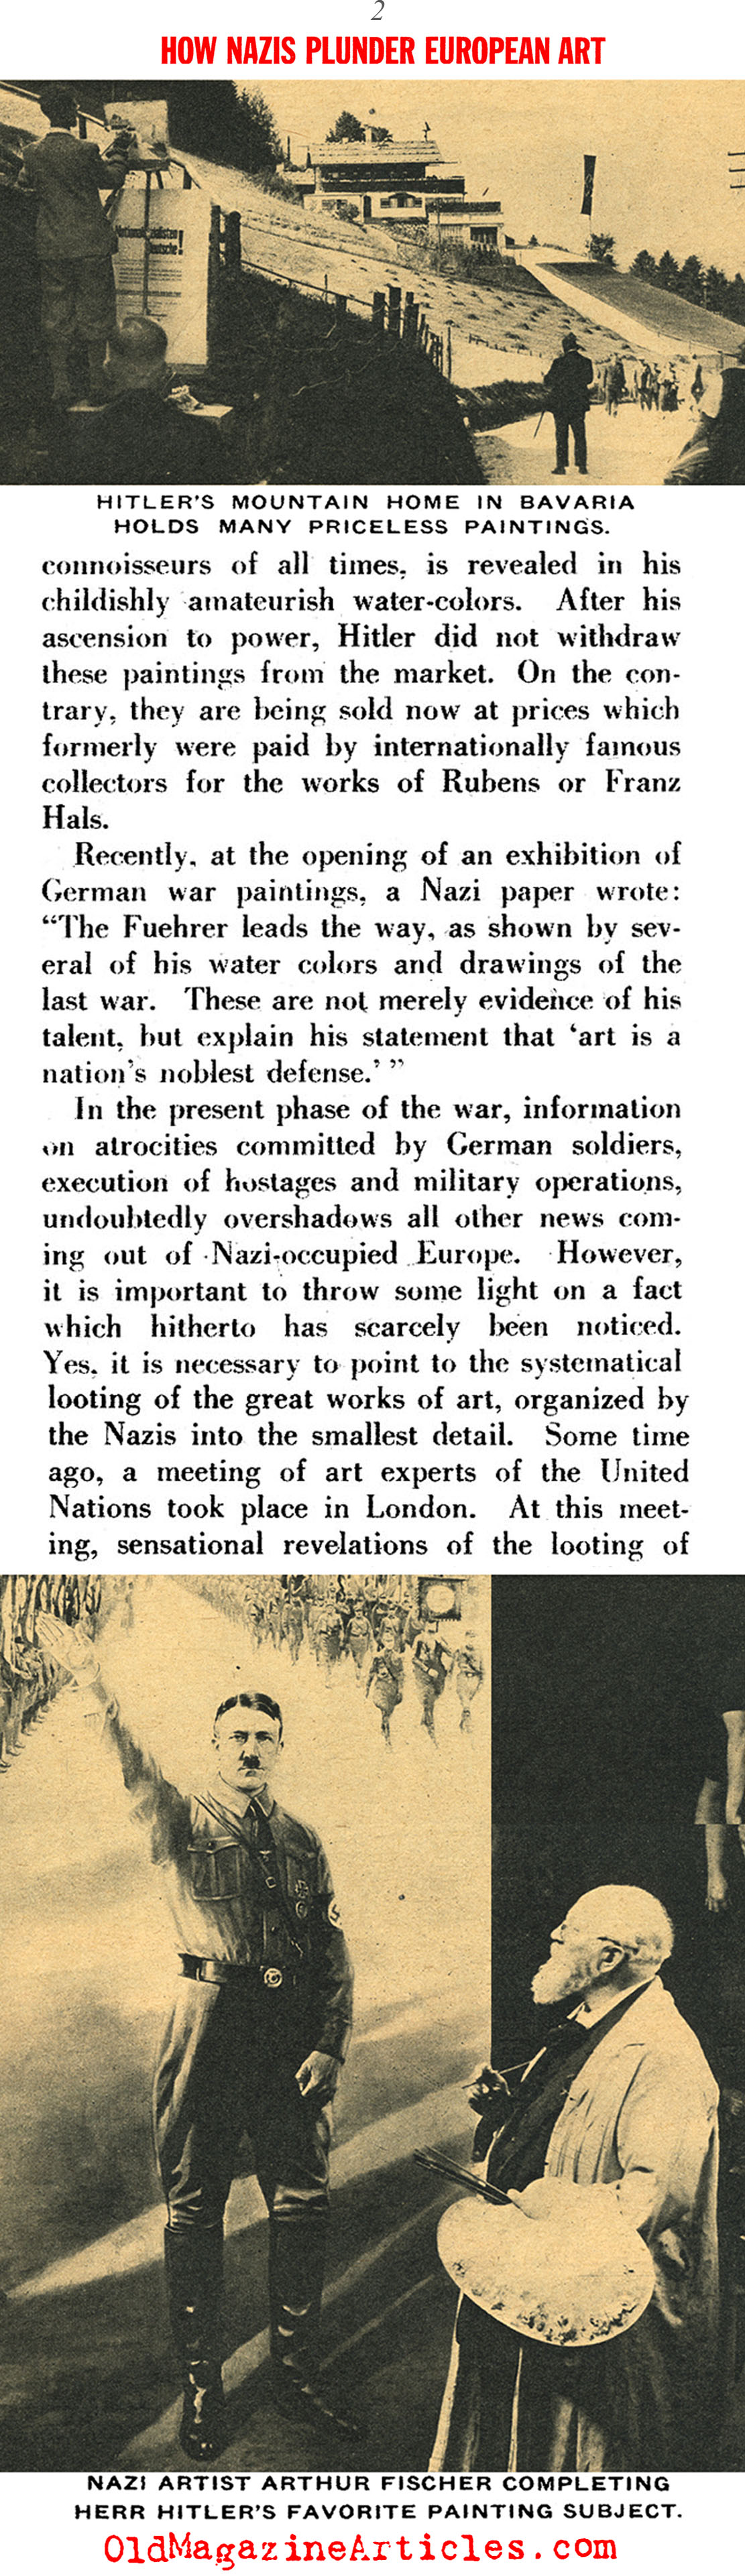 Nazi Art Plunder (Click Magazine, 1943)